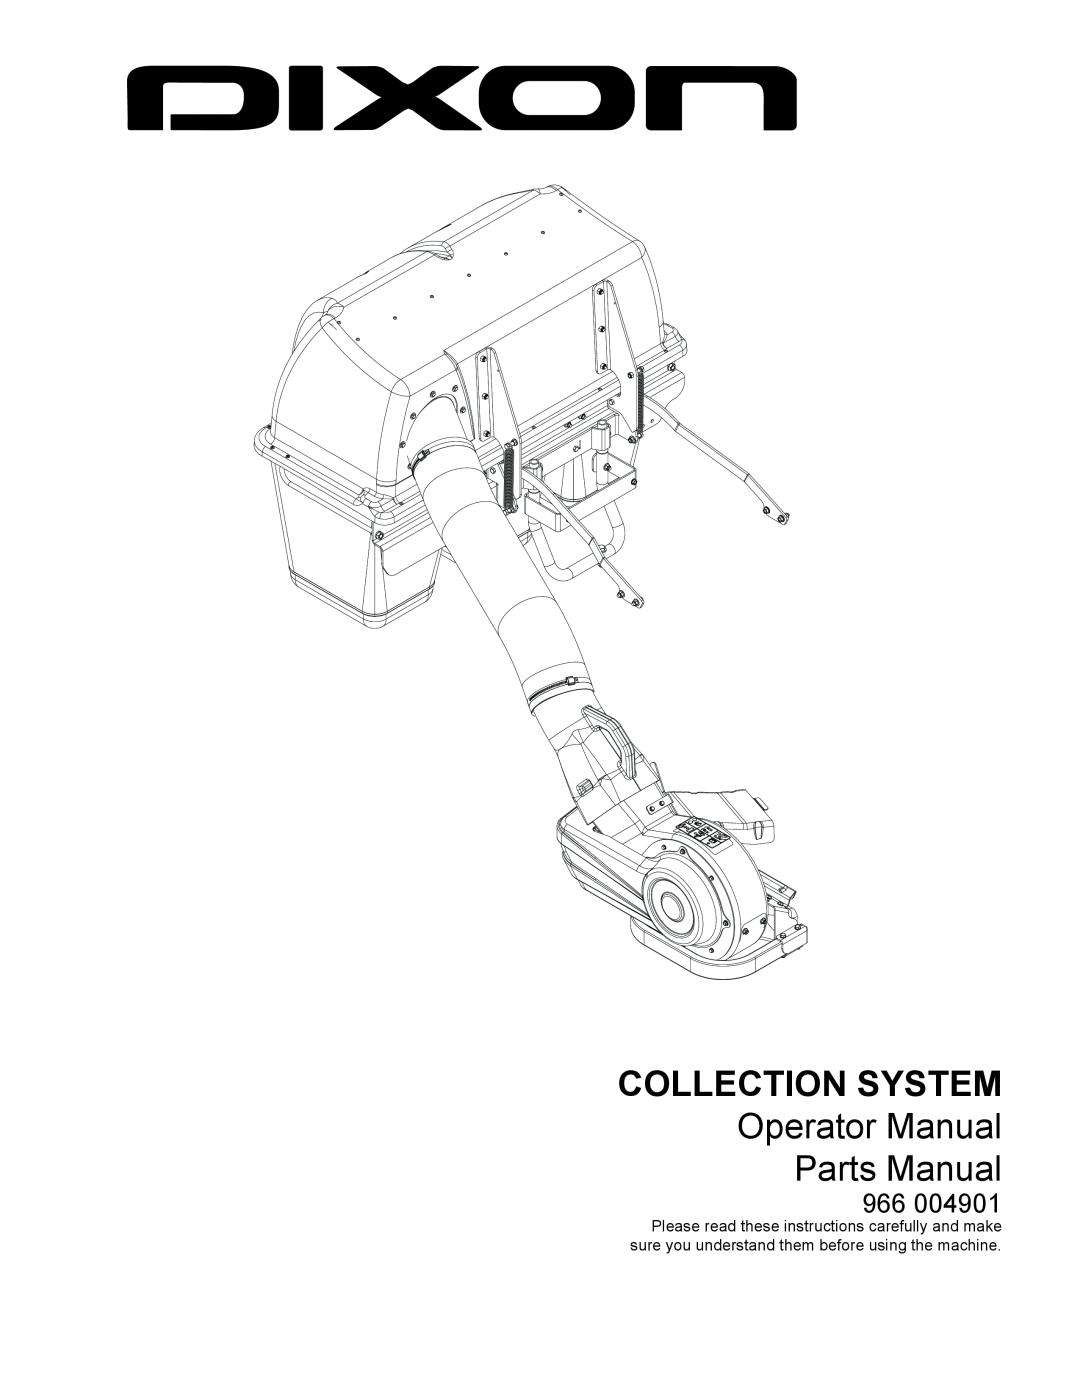 Dixon 966 004901 manual Collection System, Operator Manual Parts Manual 